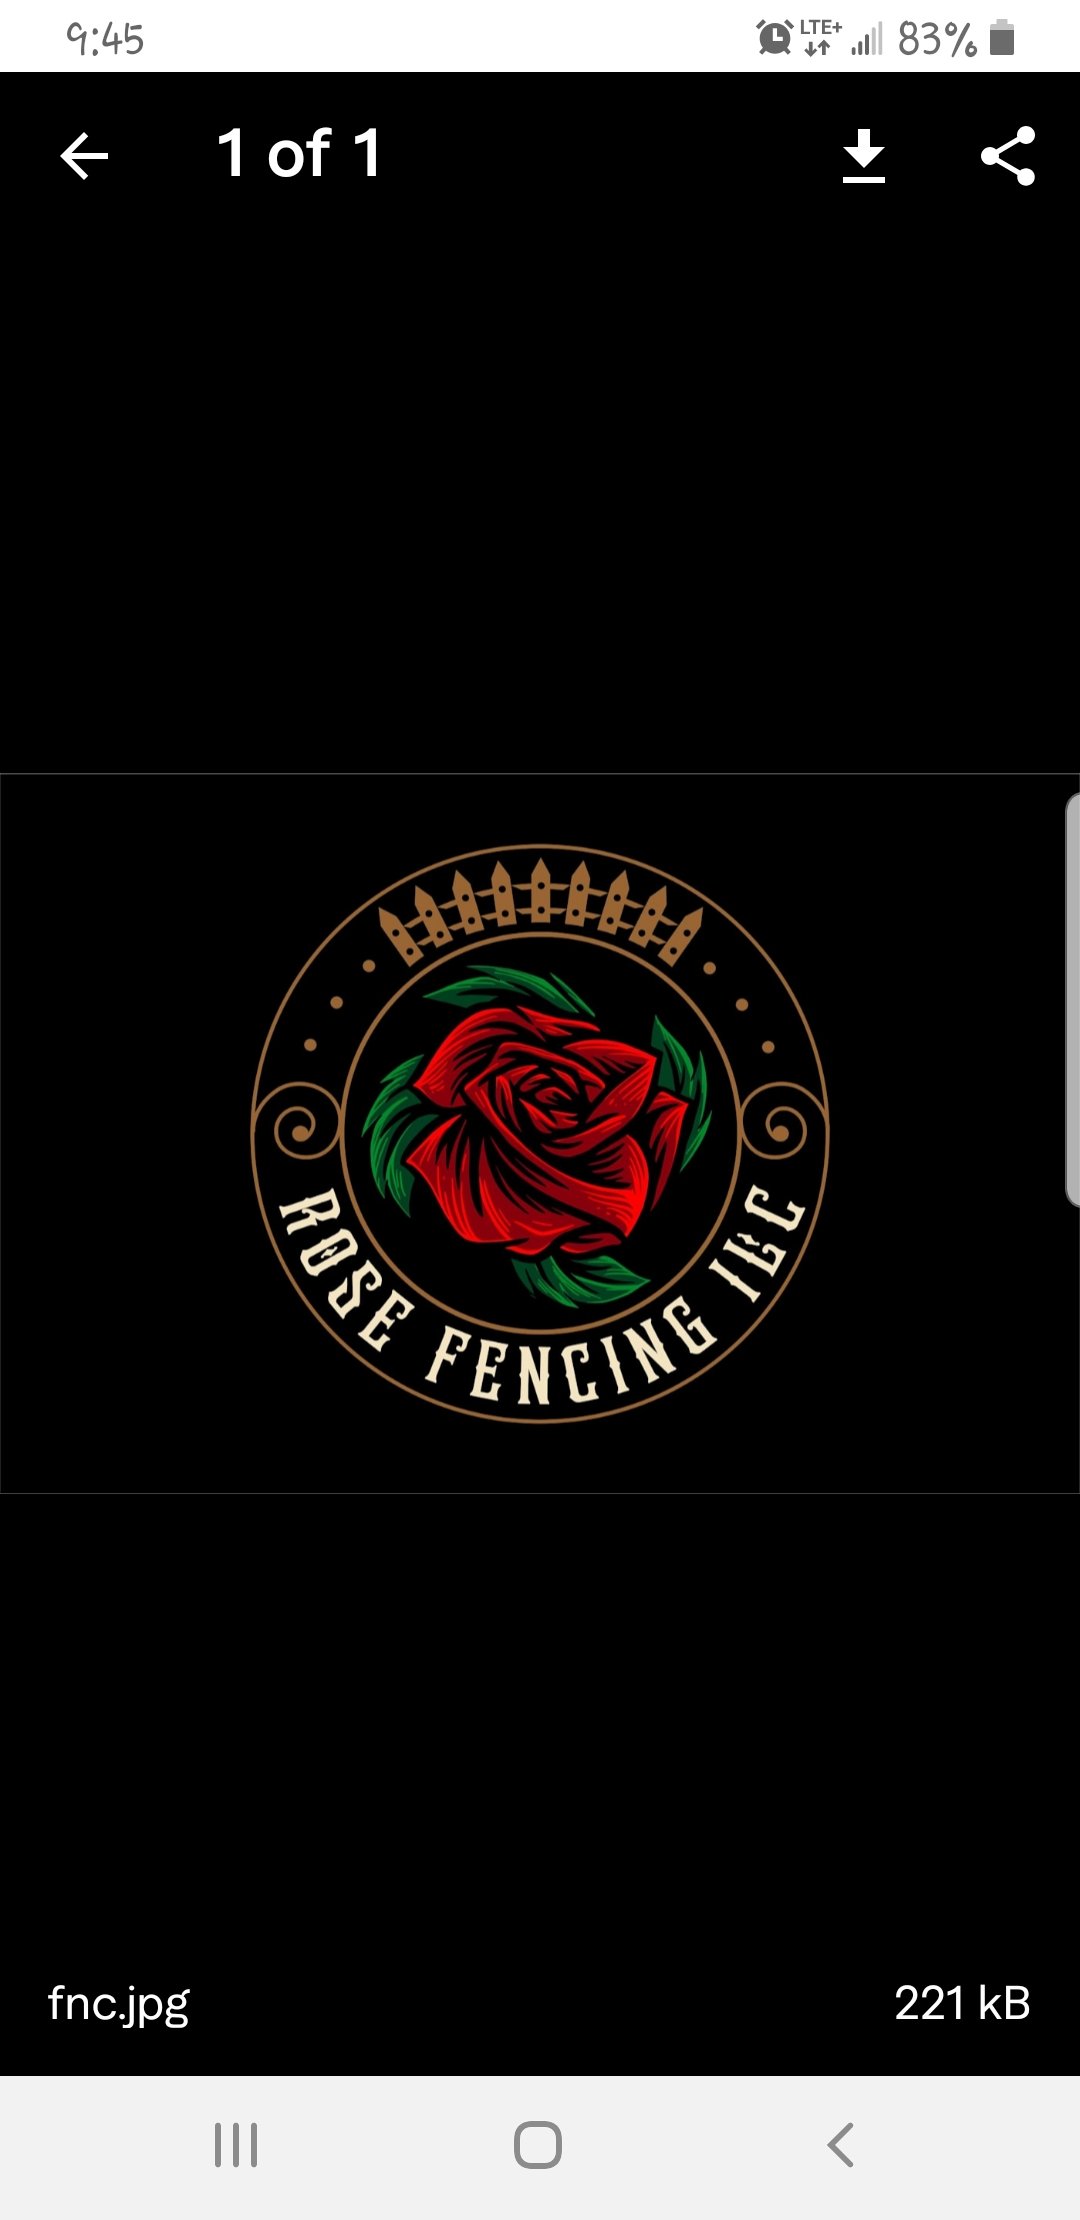 Rose Fencing, LLC Logo